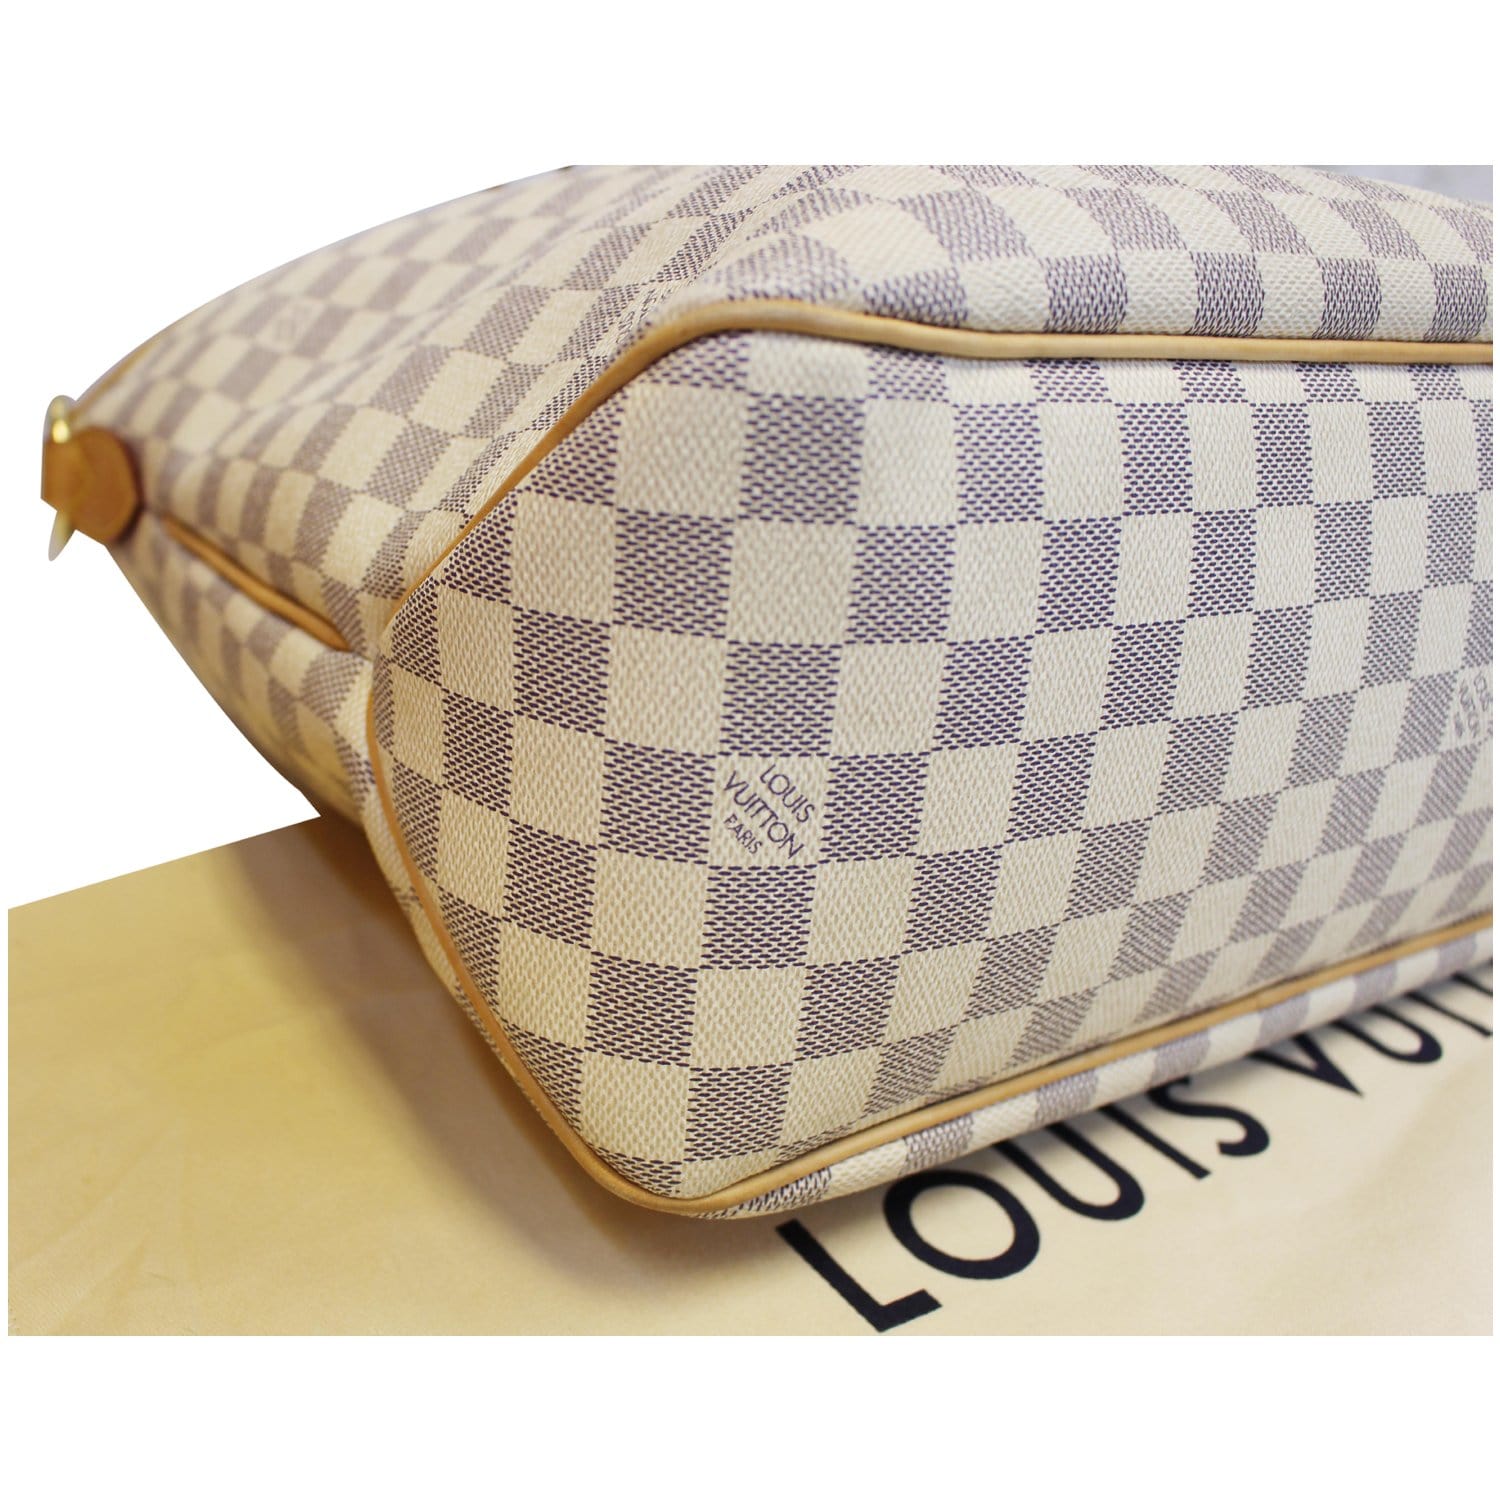 100％ Authentic Louis Vuitton Delightful MM Damier Azur Tote ShoulderBag  handbag